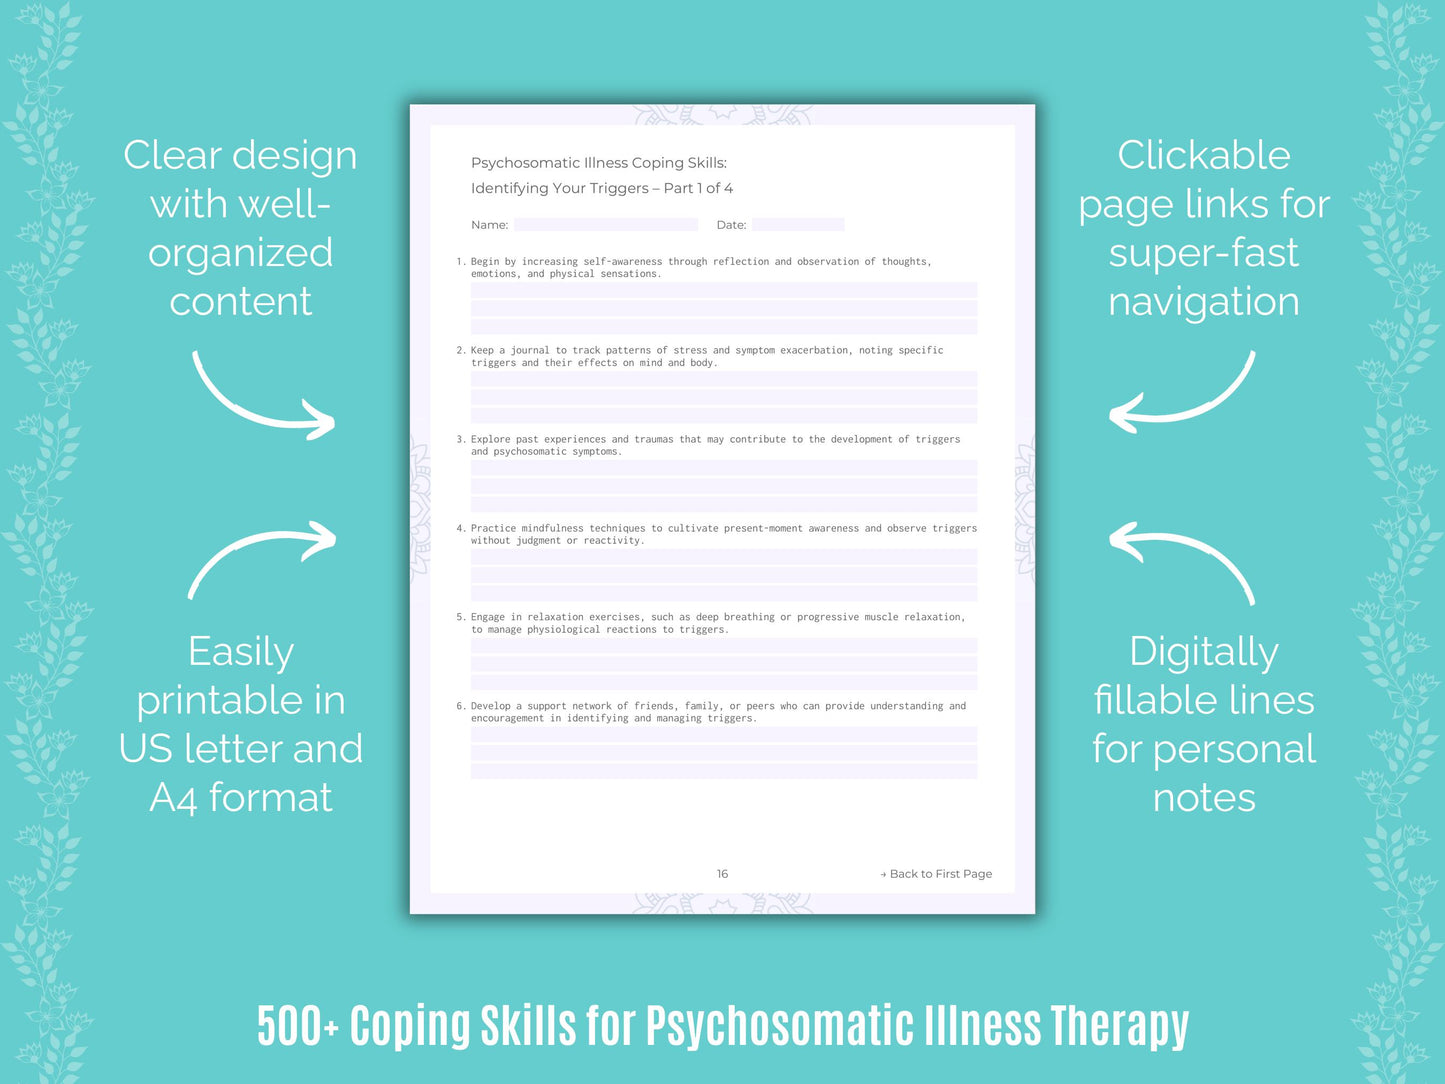 Psychosomatic Illness Coping Skills Resource